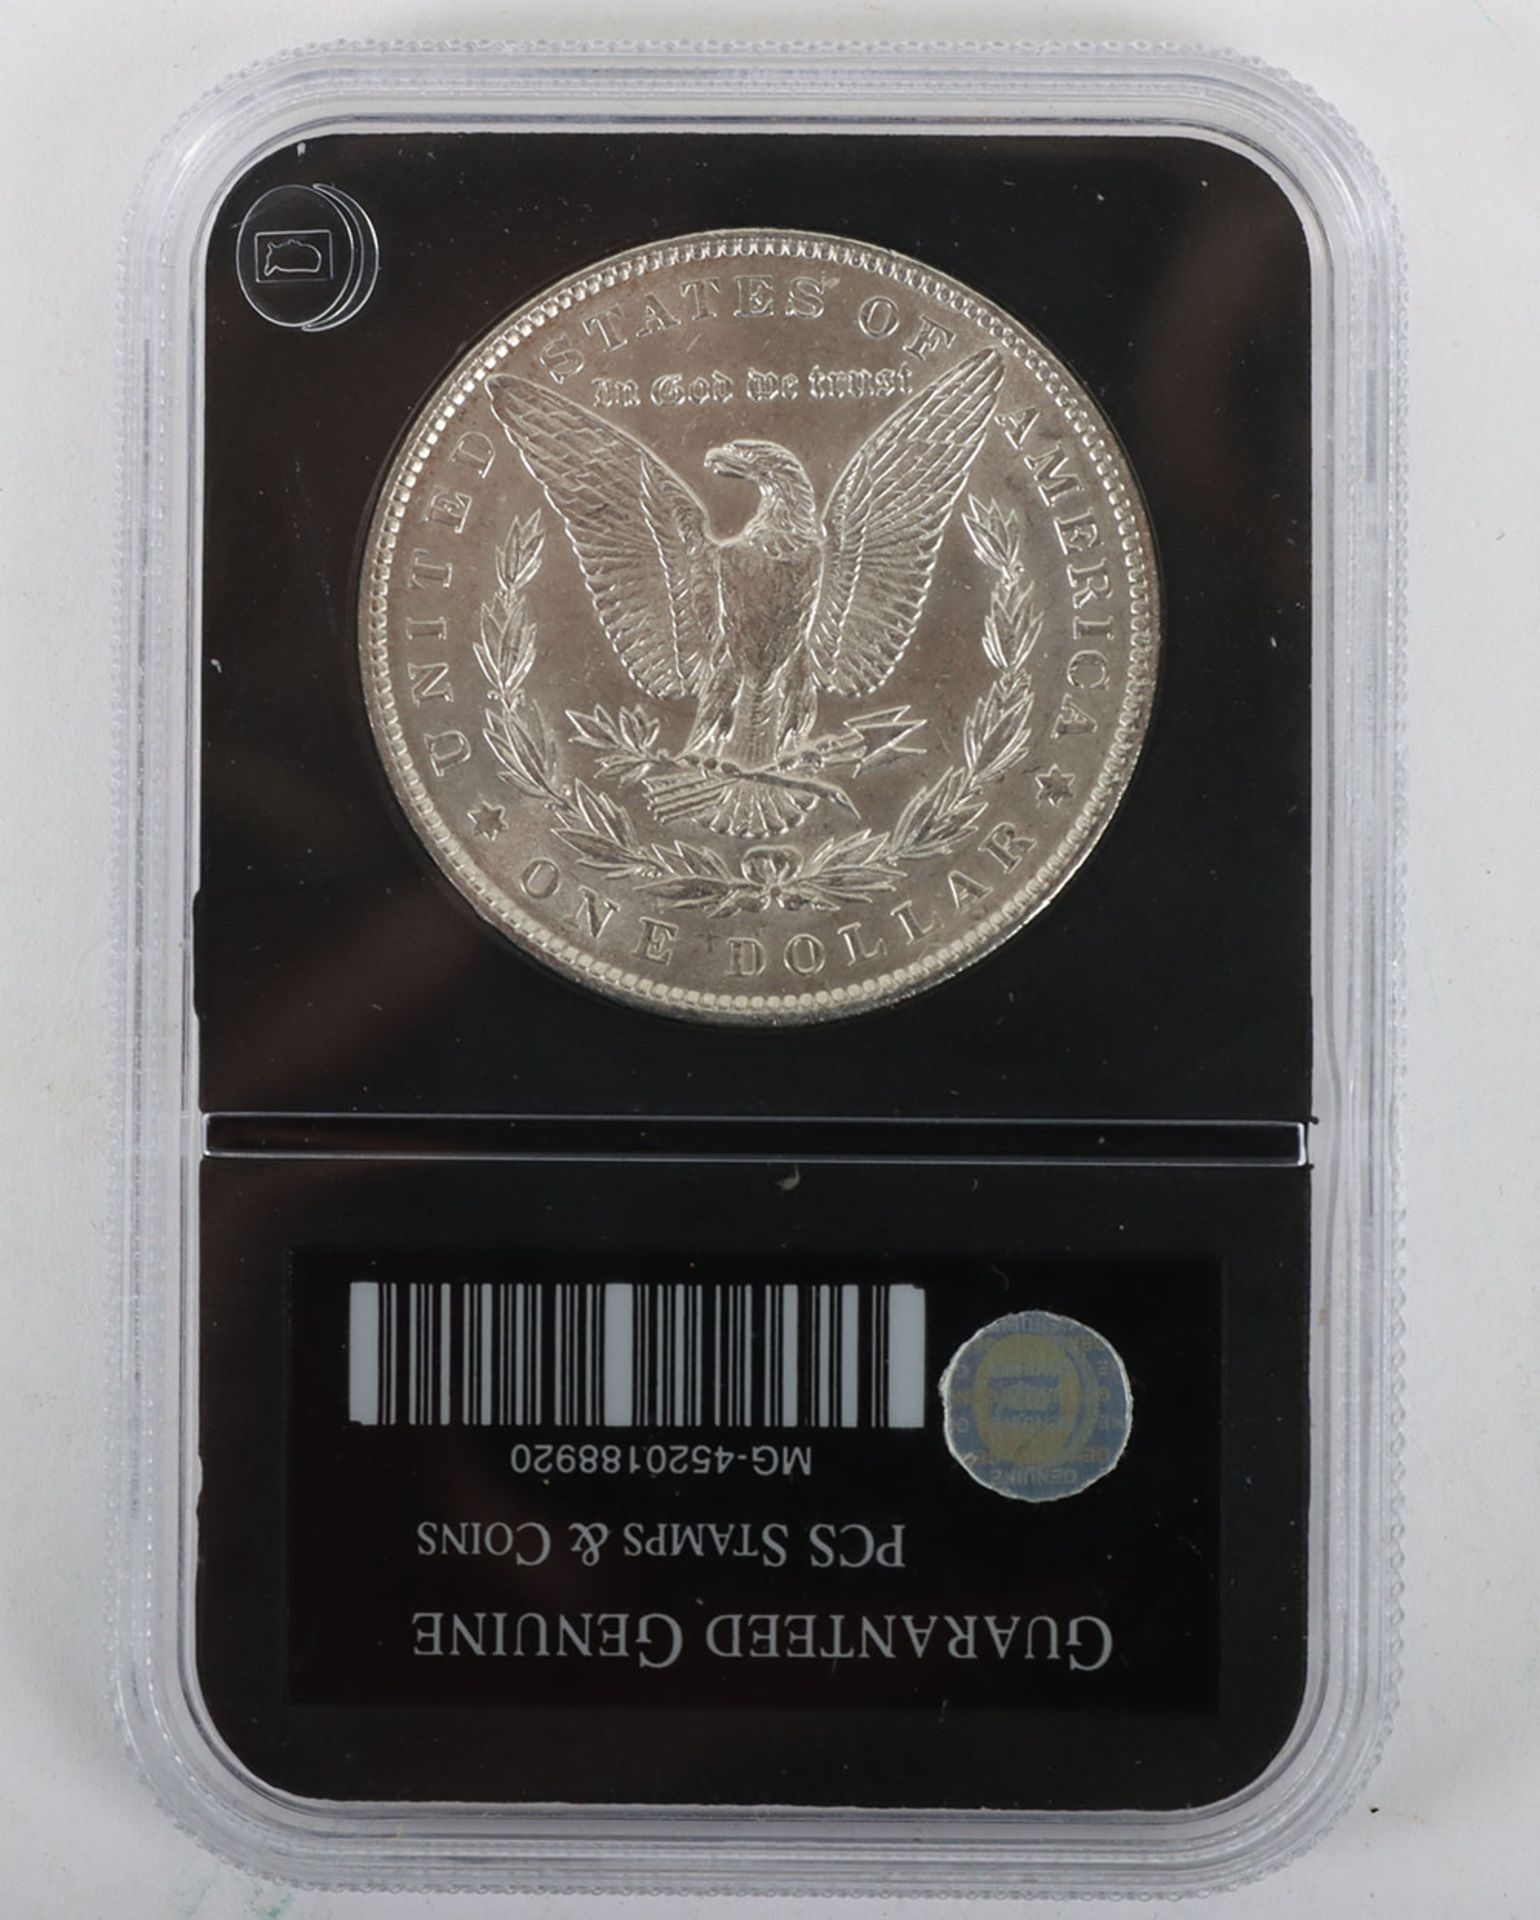 A US 1889 Dollar, PCS graded UNC - Image 2 of 2